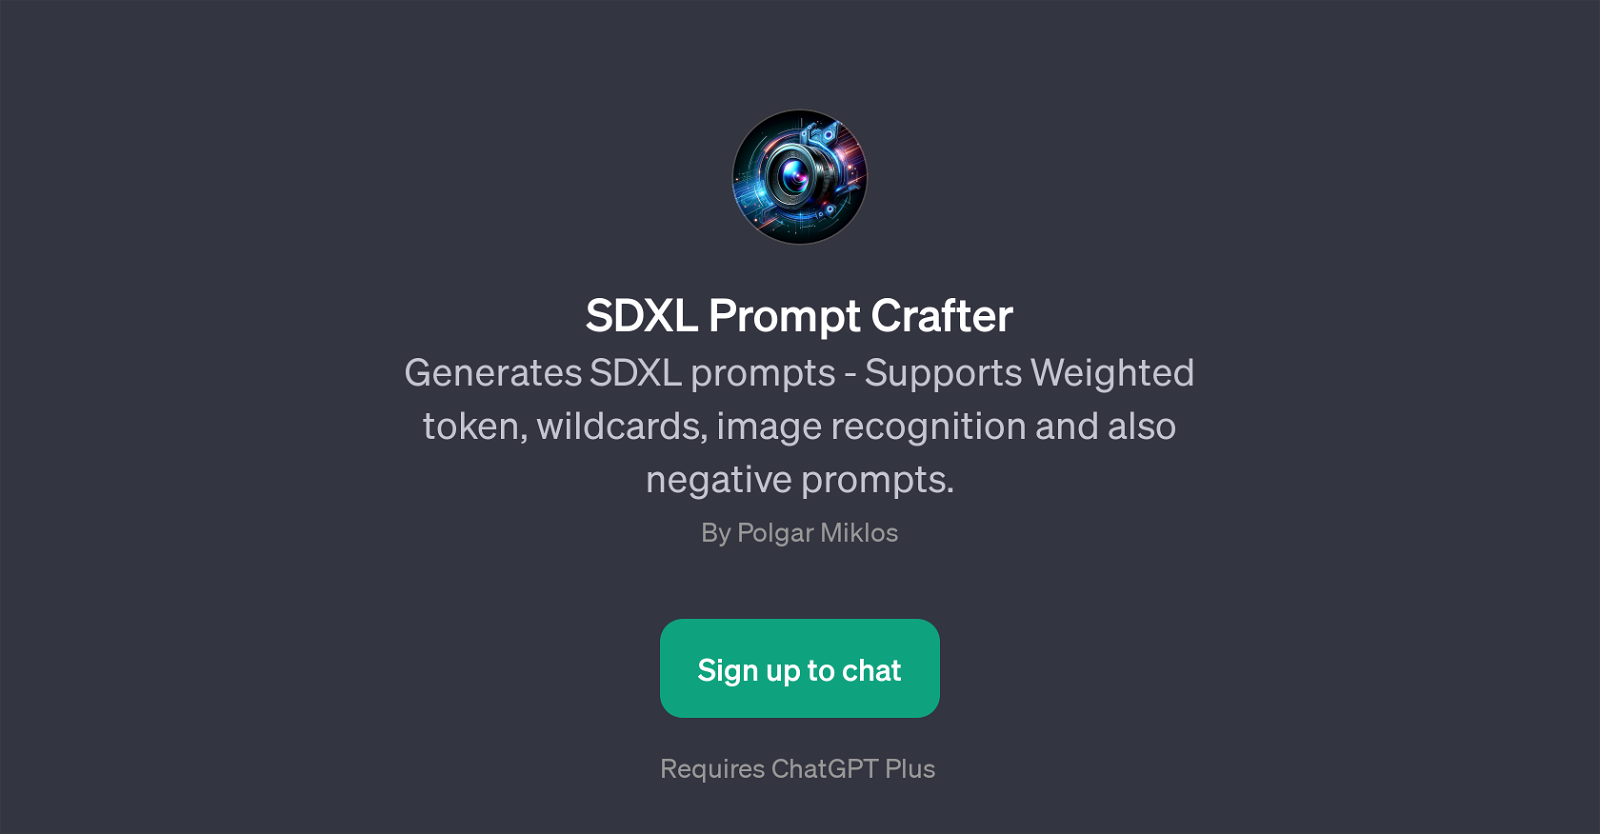 SDXL Prompt Crafter website